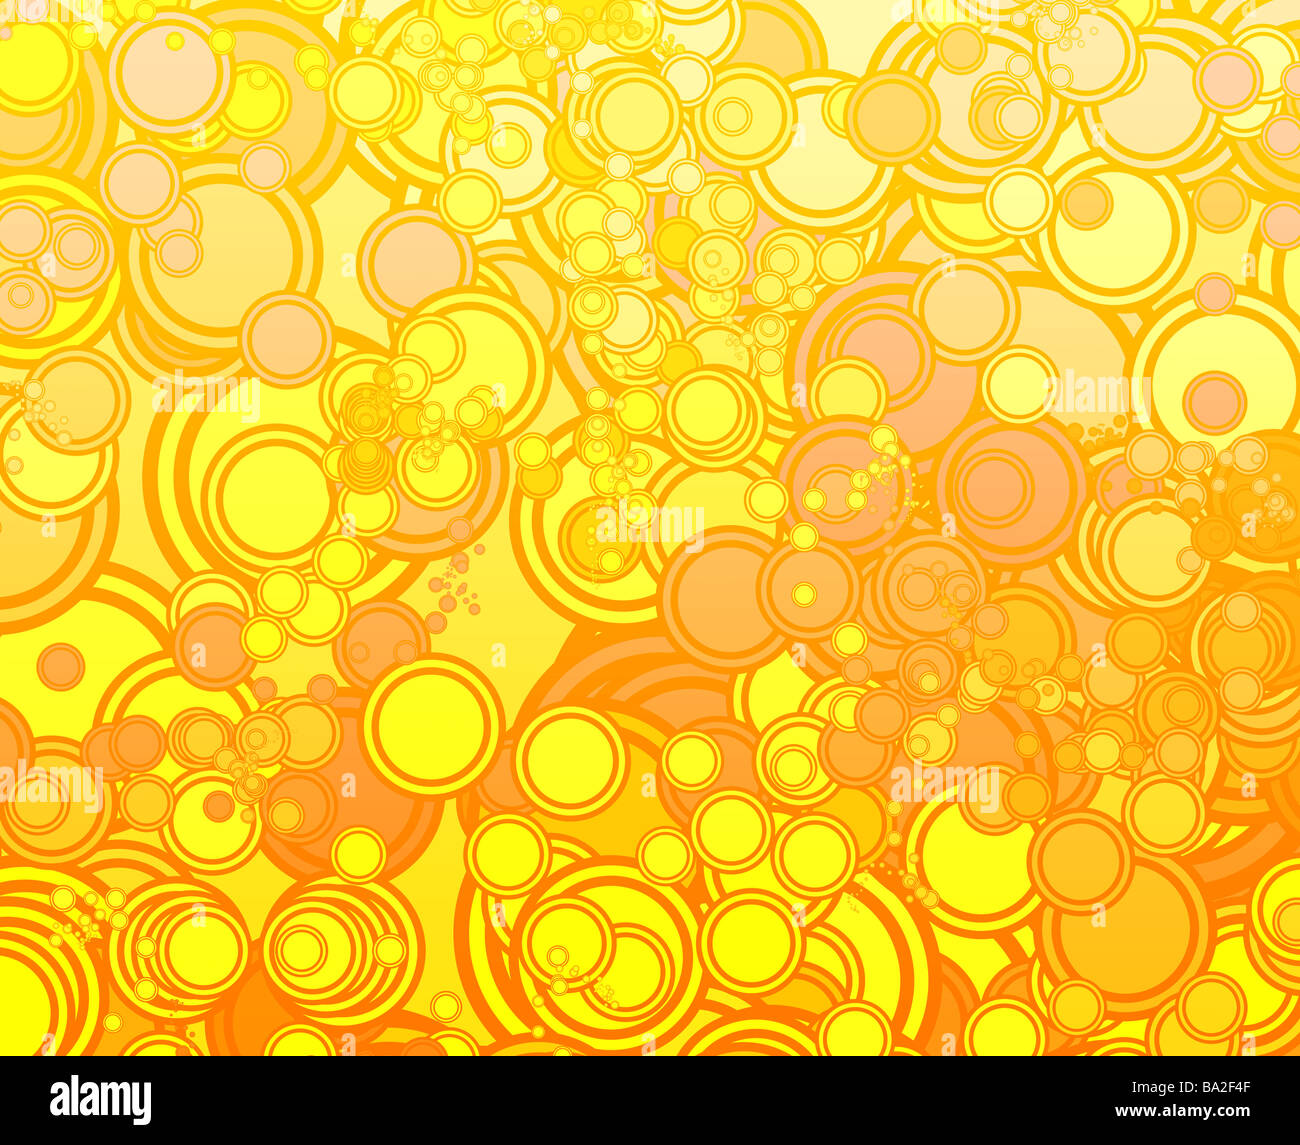 Retro-abstrakt psychedelisch bunten Kreis-Muster-design Stockfoto